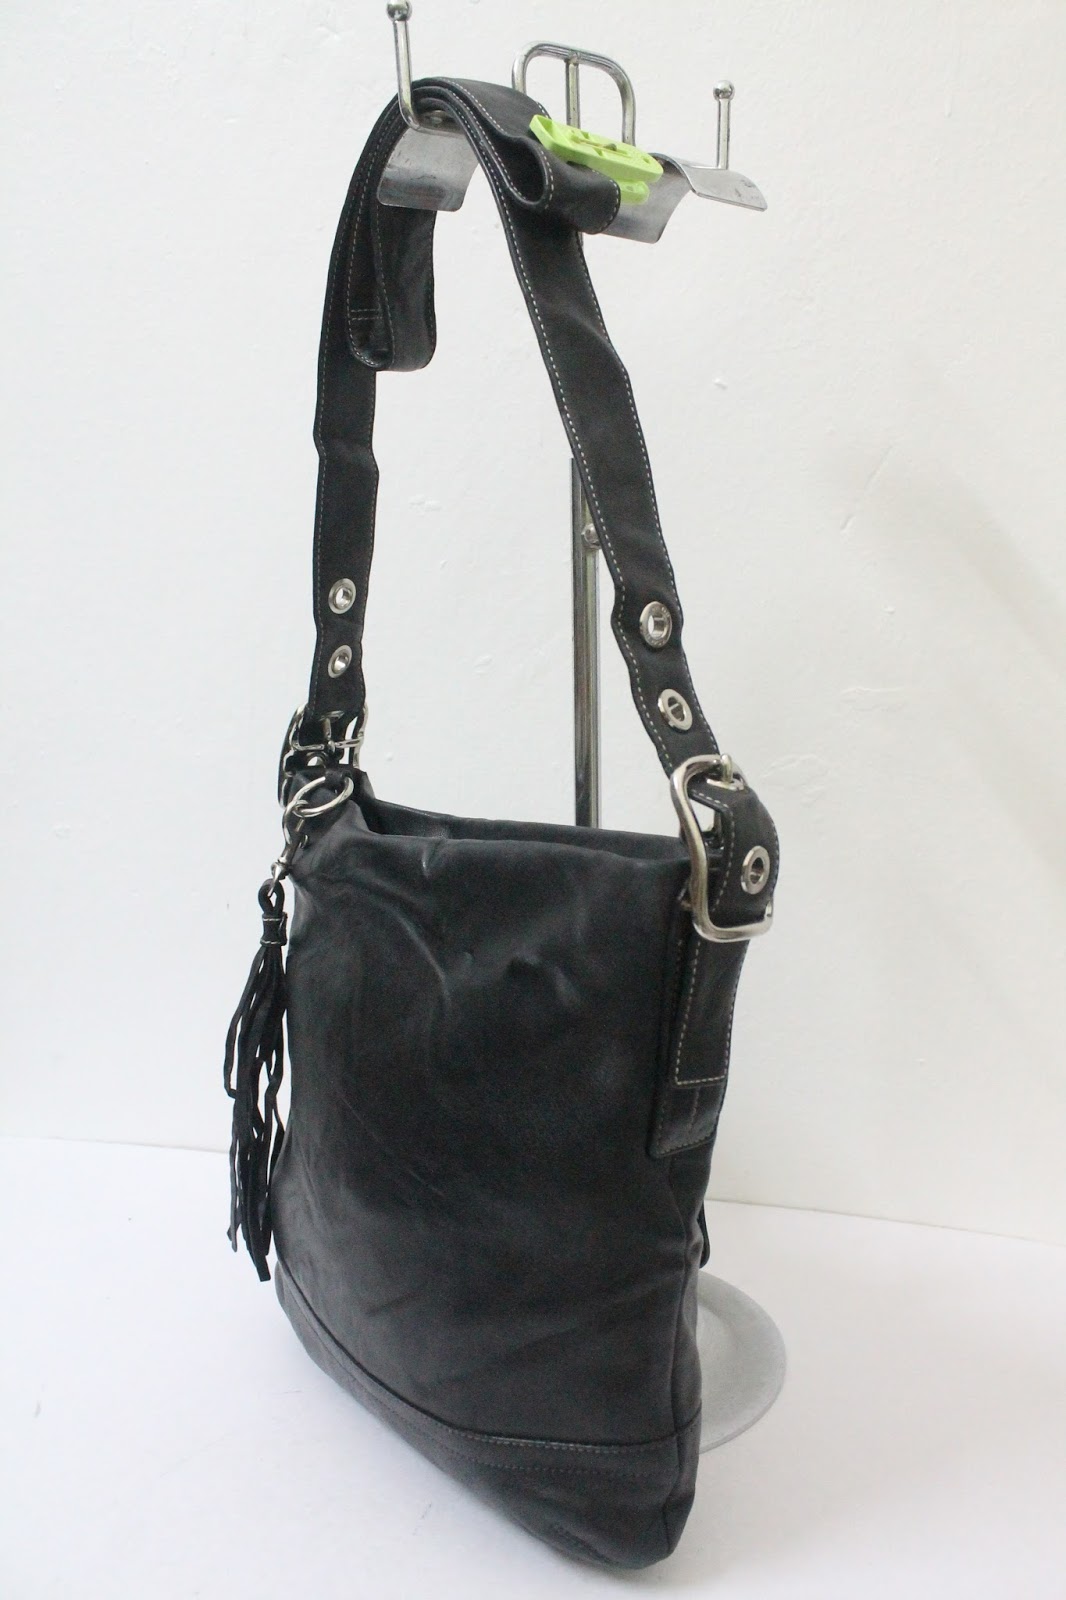 BUNDLEBARANGBAEK: Authentic COACH Leather Crossbody bag.